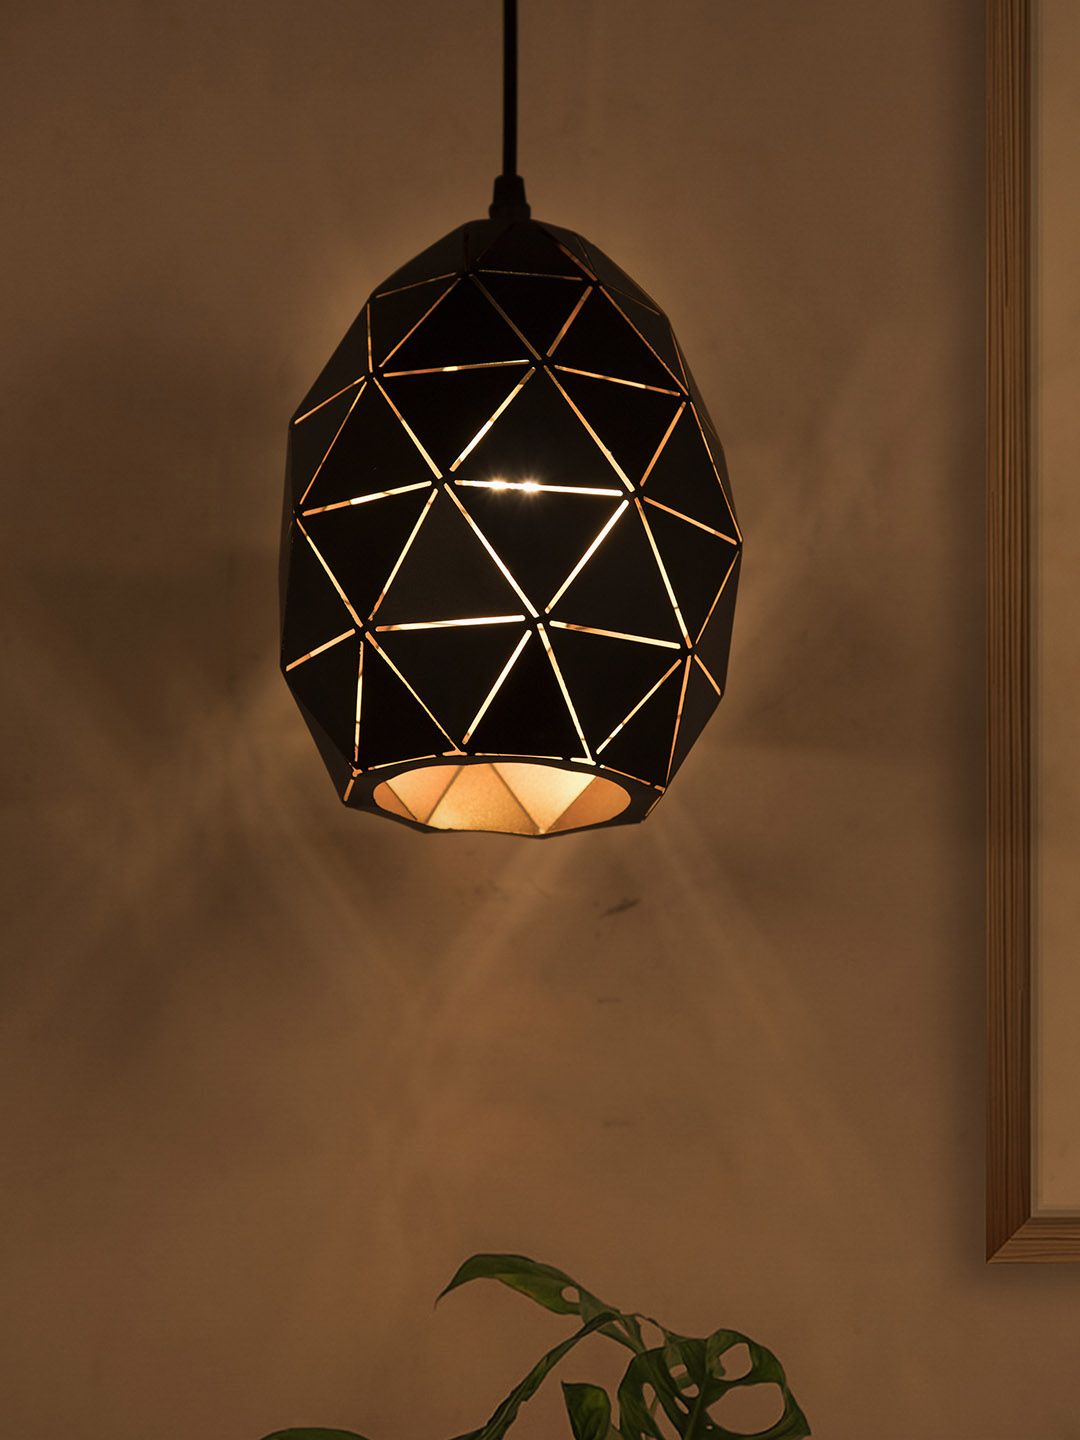 Fos Lighting Black Textured Geometric Shaped Hanging Lamp Price in India